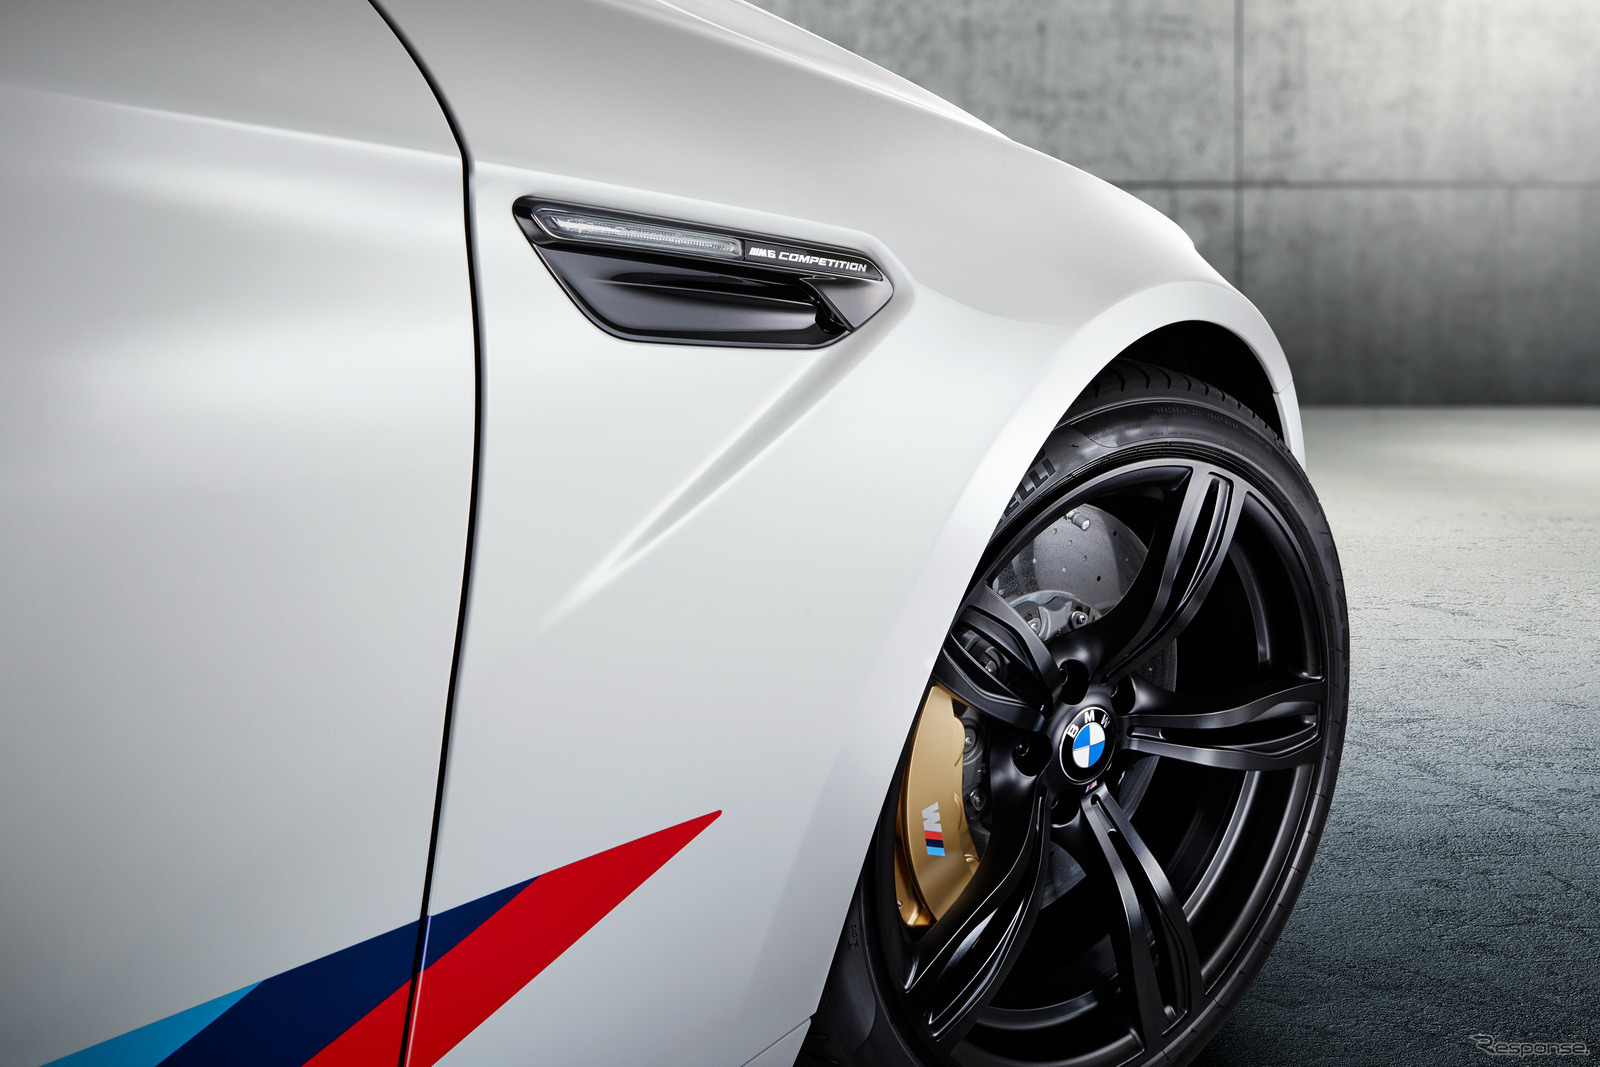 BMW M6 コンペティションエディション